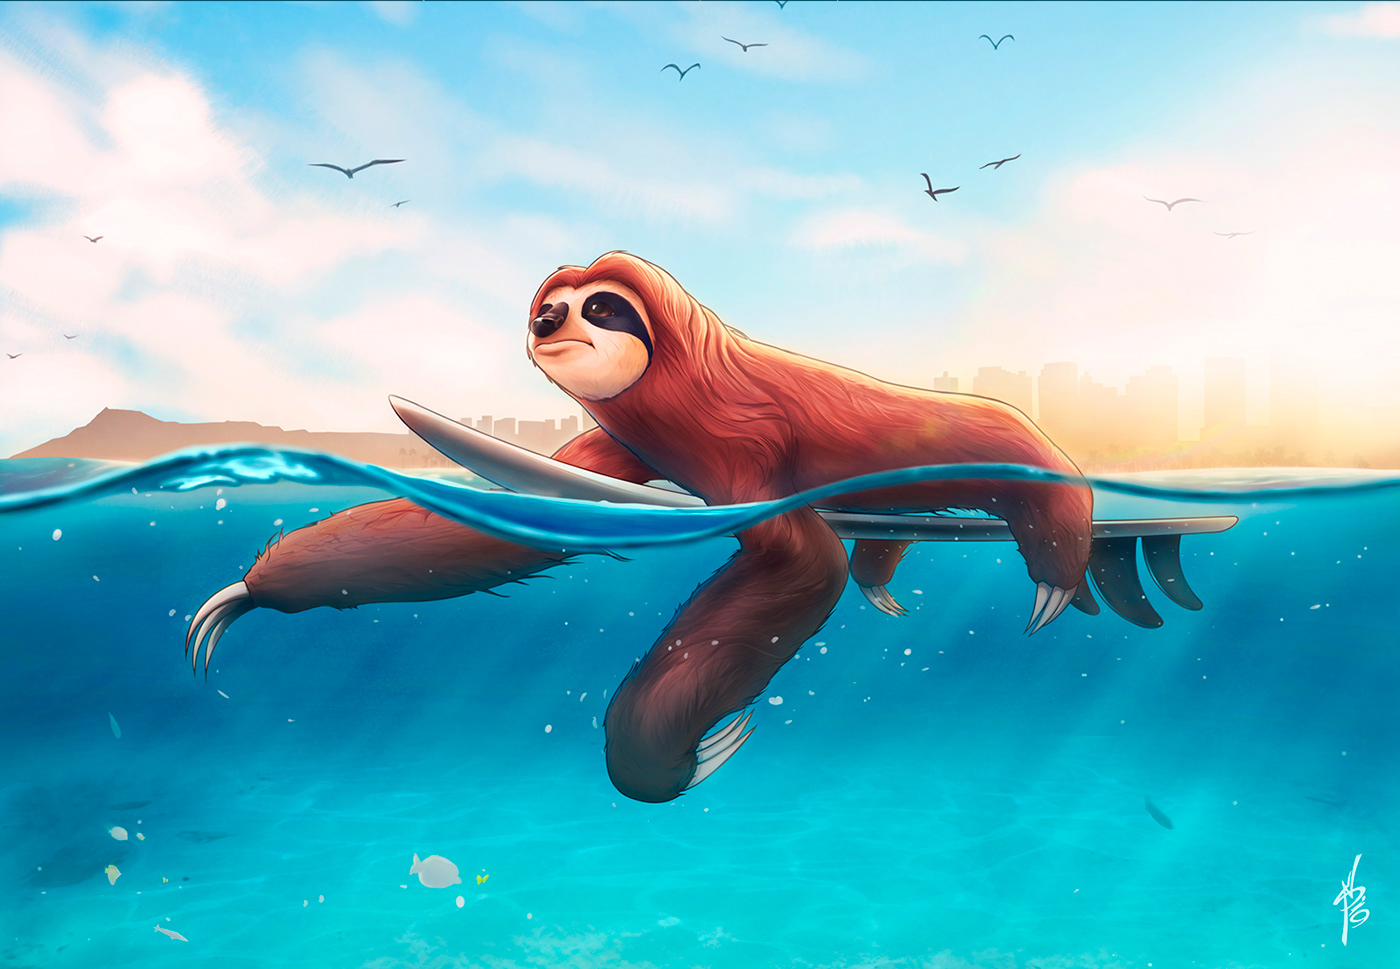 Surf surfboard surfing sport sloth water underwater waves Big Wave summer warm Ocean ILLUSTRATION  digital painting warm vibes